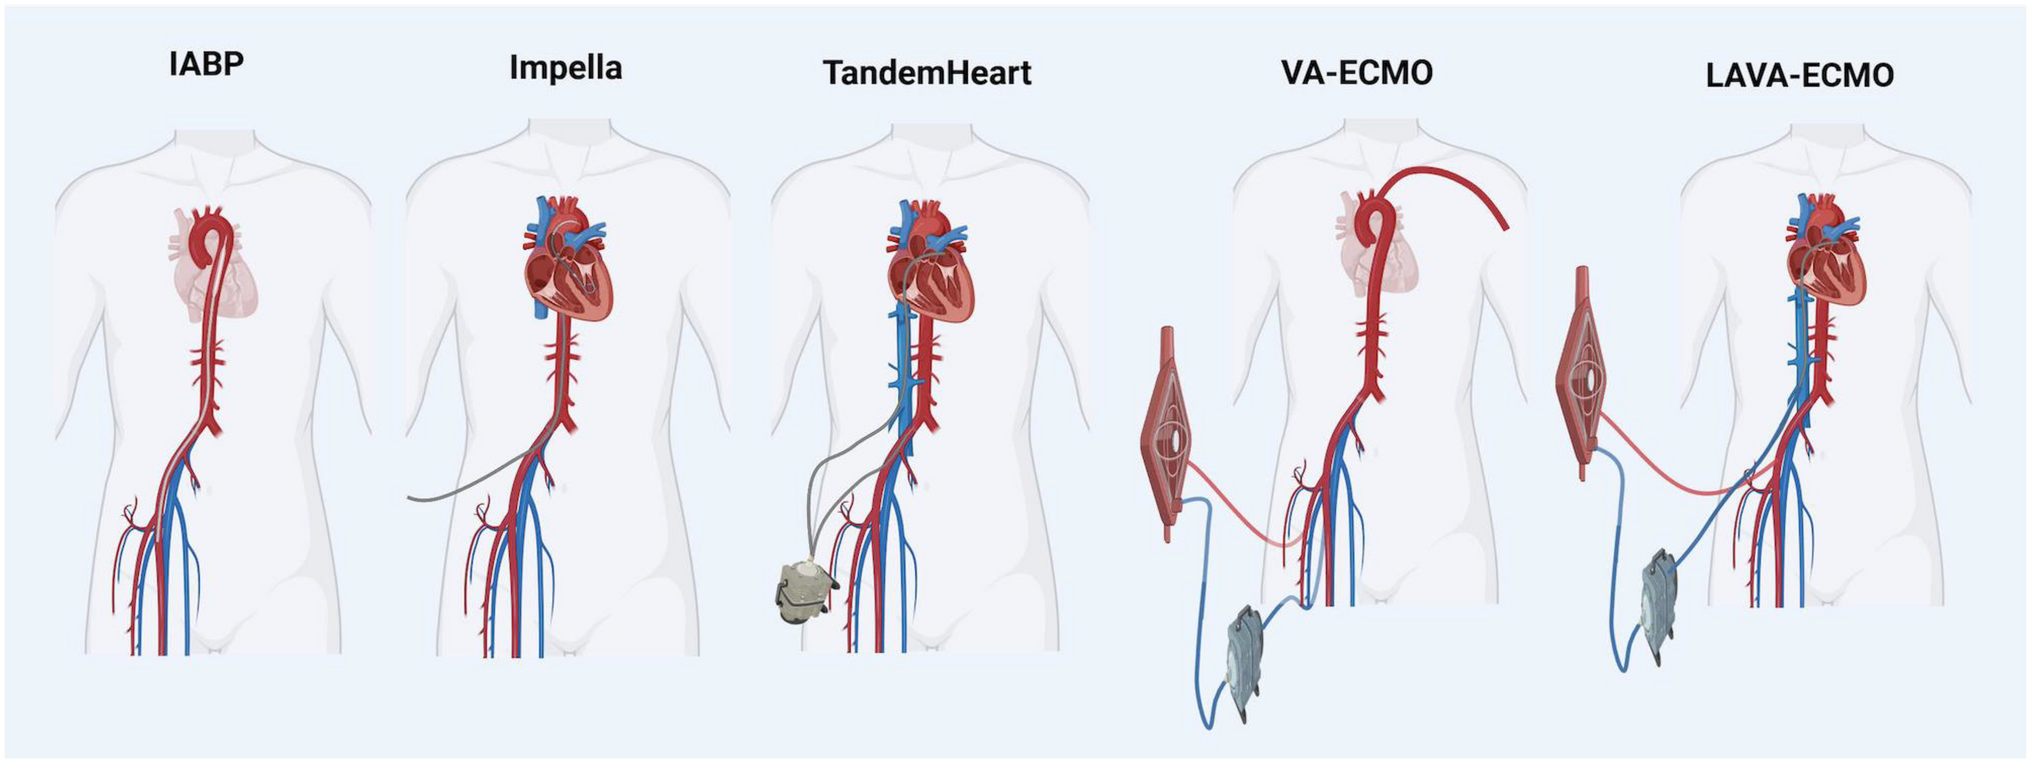 Mechanical Circulatory Support for High-Risk Percutaneous Coronary Intervention